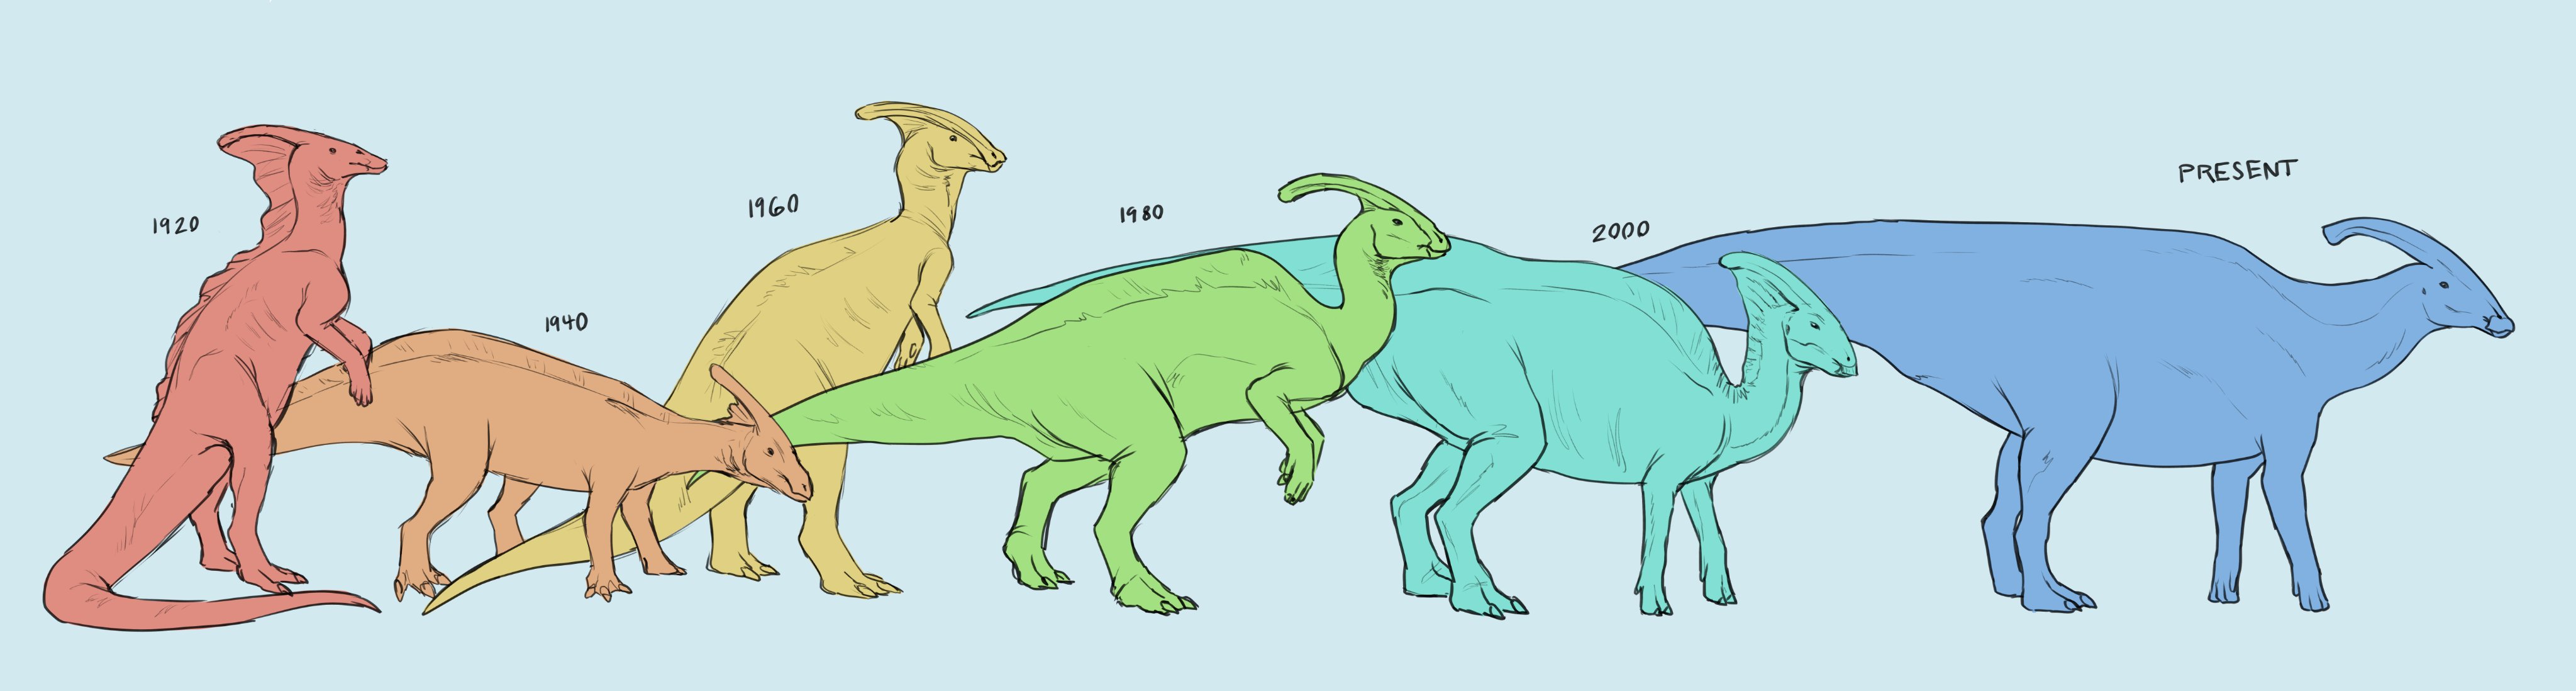 History of Parasaurolophus reconstructions